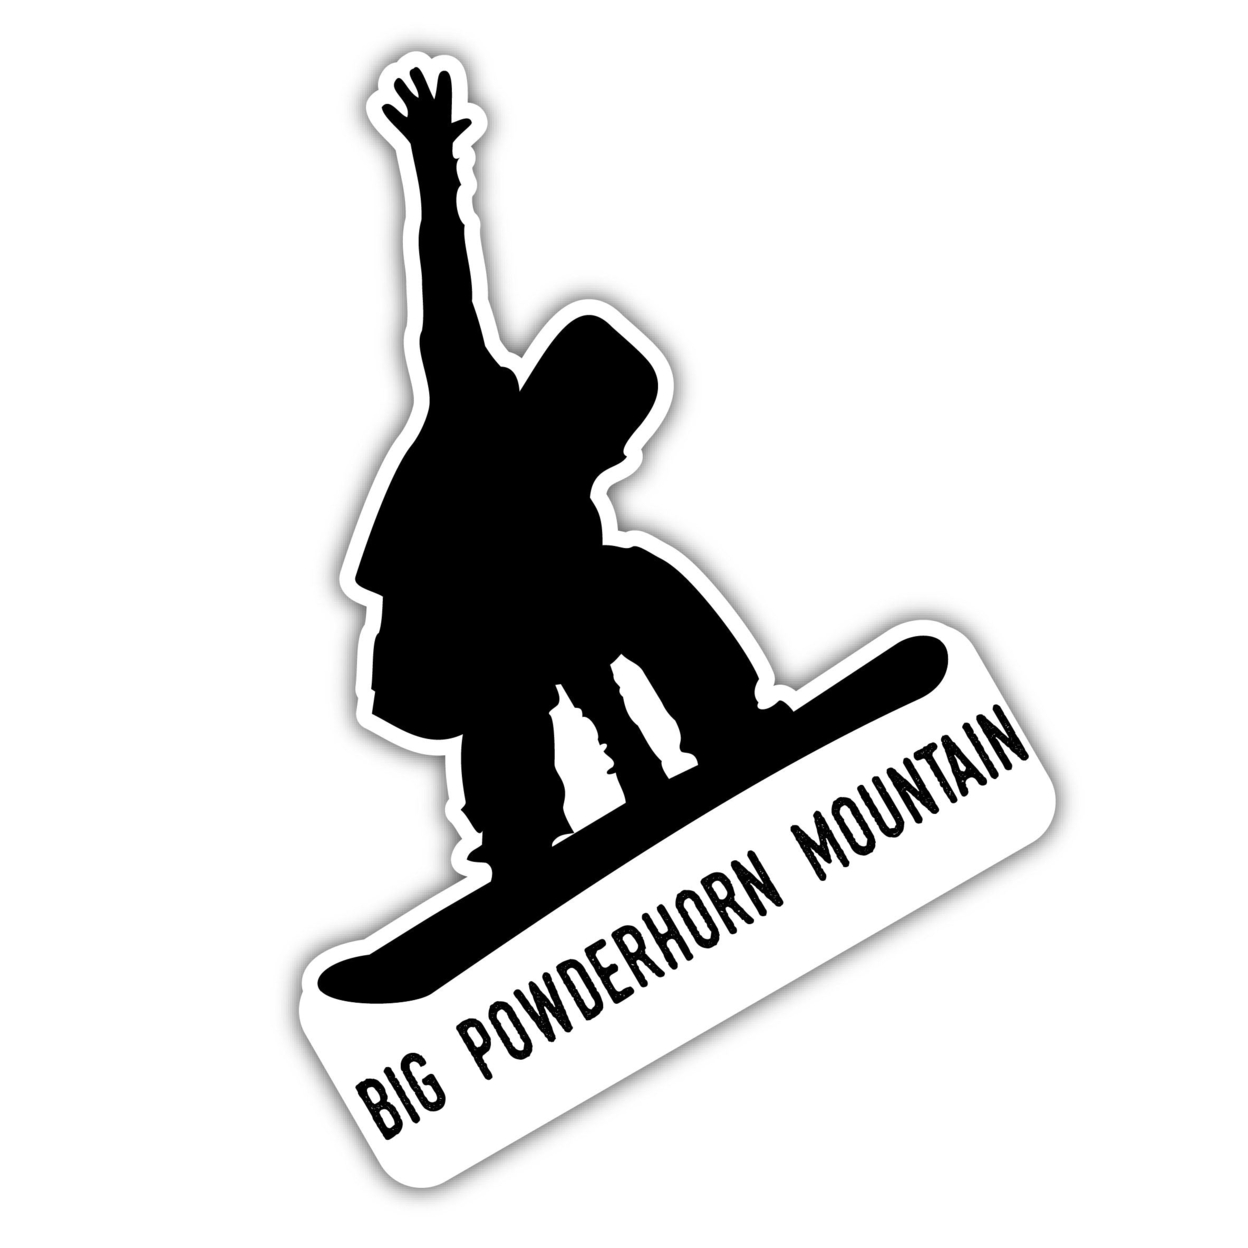 Big Powderhorn Mountain Michigan Ski Adventures Souvenir Approximately 5 X 2.5-Inch Vinyl Decal Sticker Goggle Design